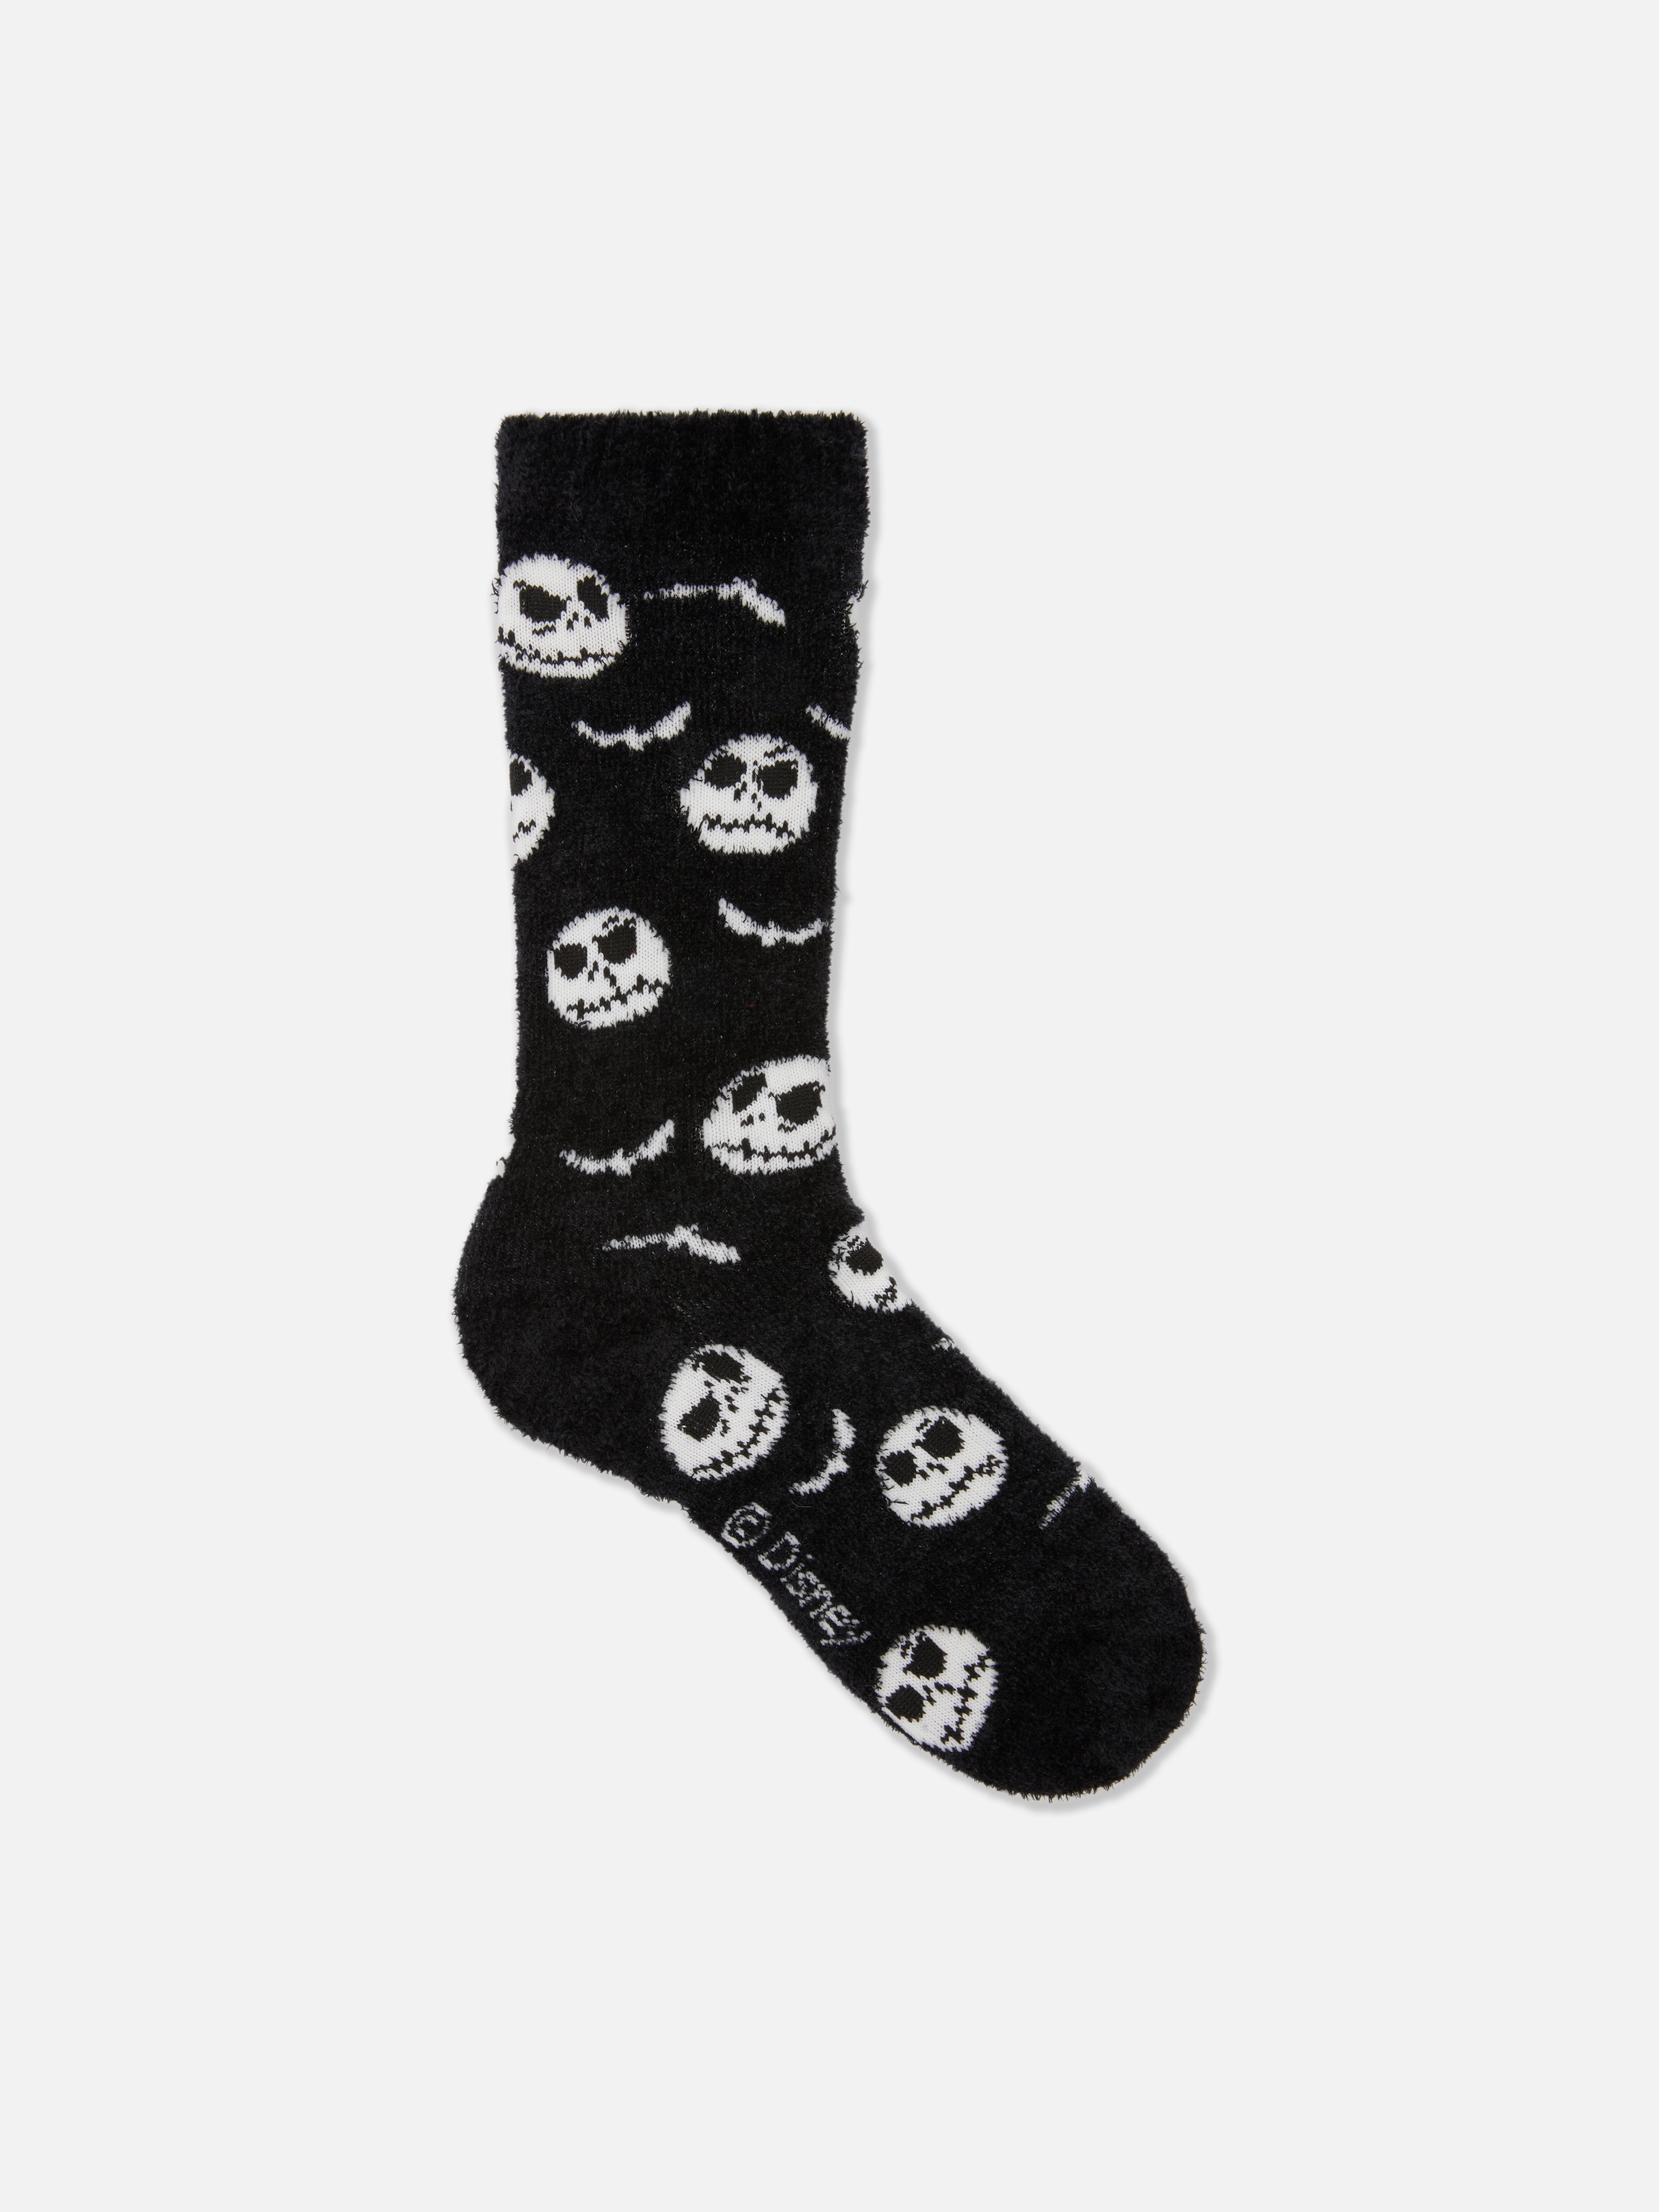 „The Nightmare Before Christmas“ kuschelige Socken